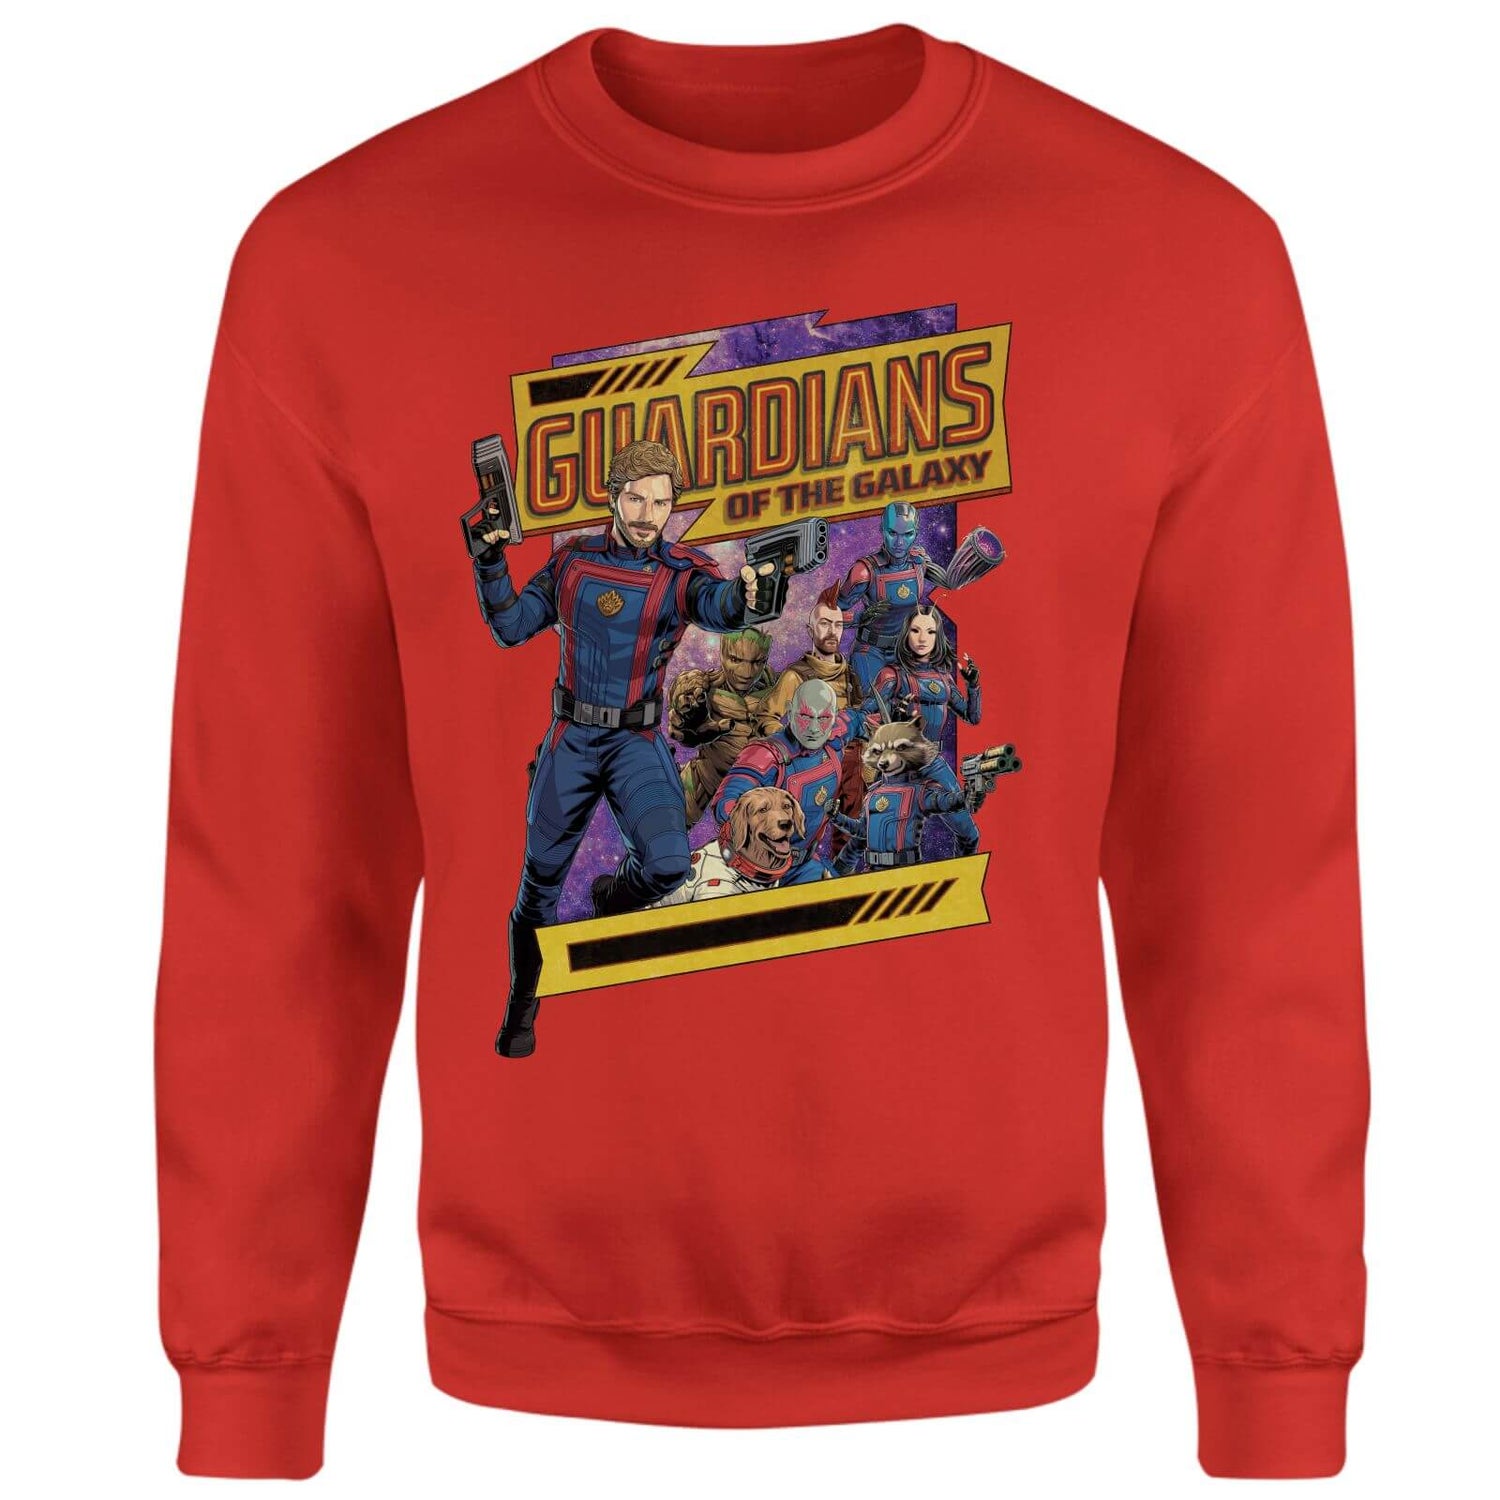 Guardians of the Galaxy Galaxy Sweatshirt - Red